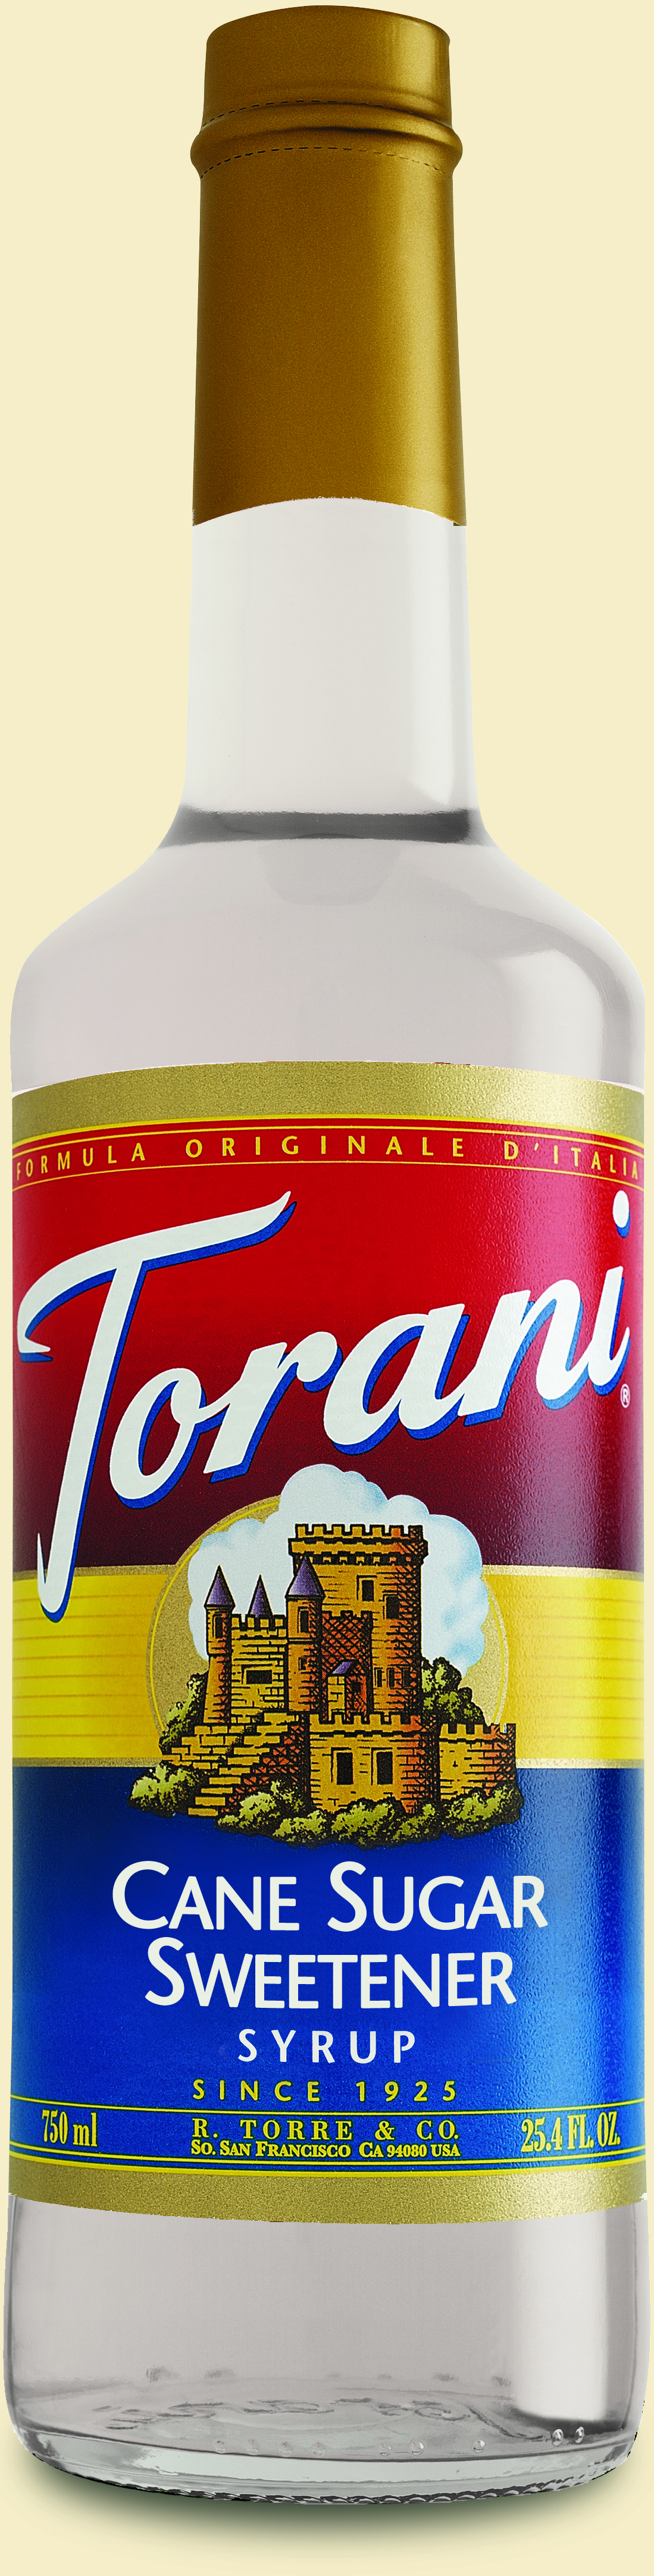 Torani Cane Sugar Sweetener 4/750ml - Sold by EA